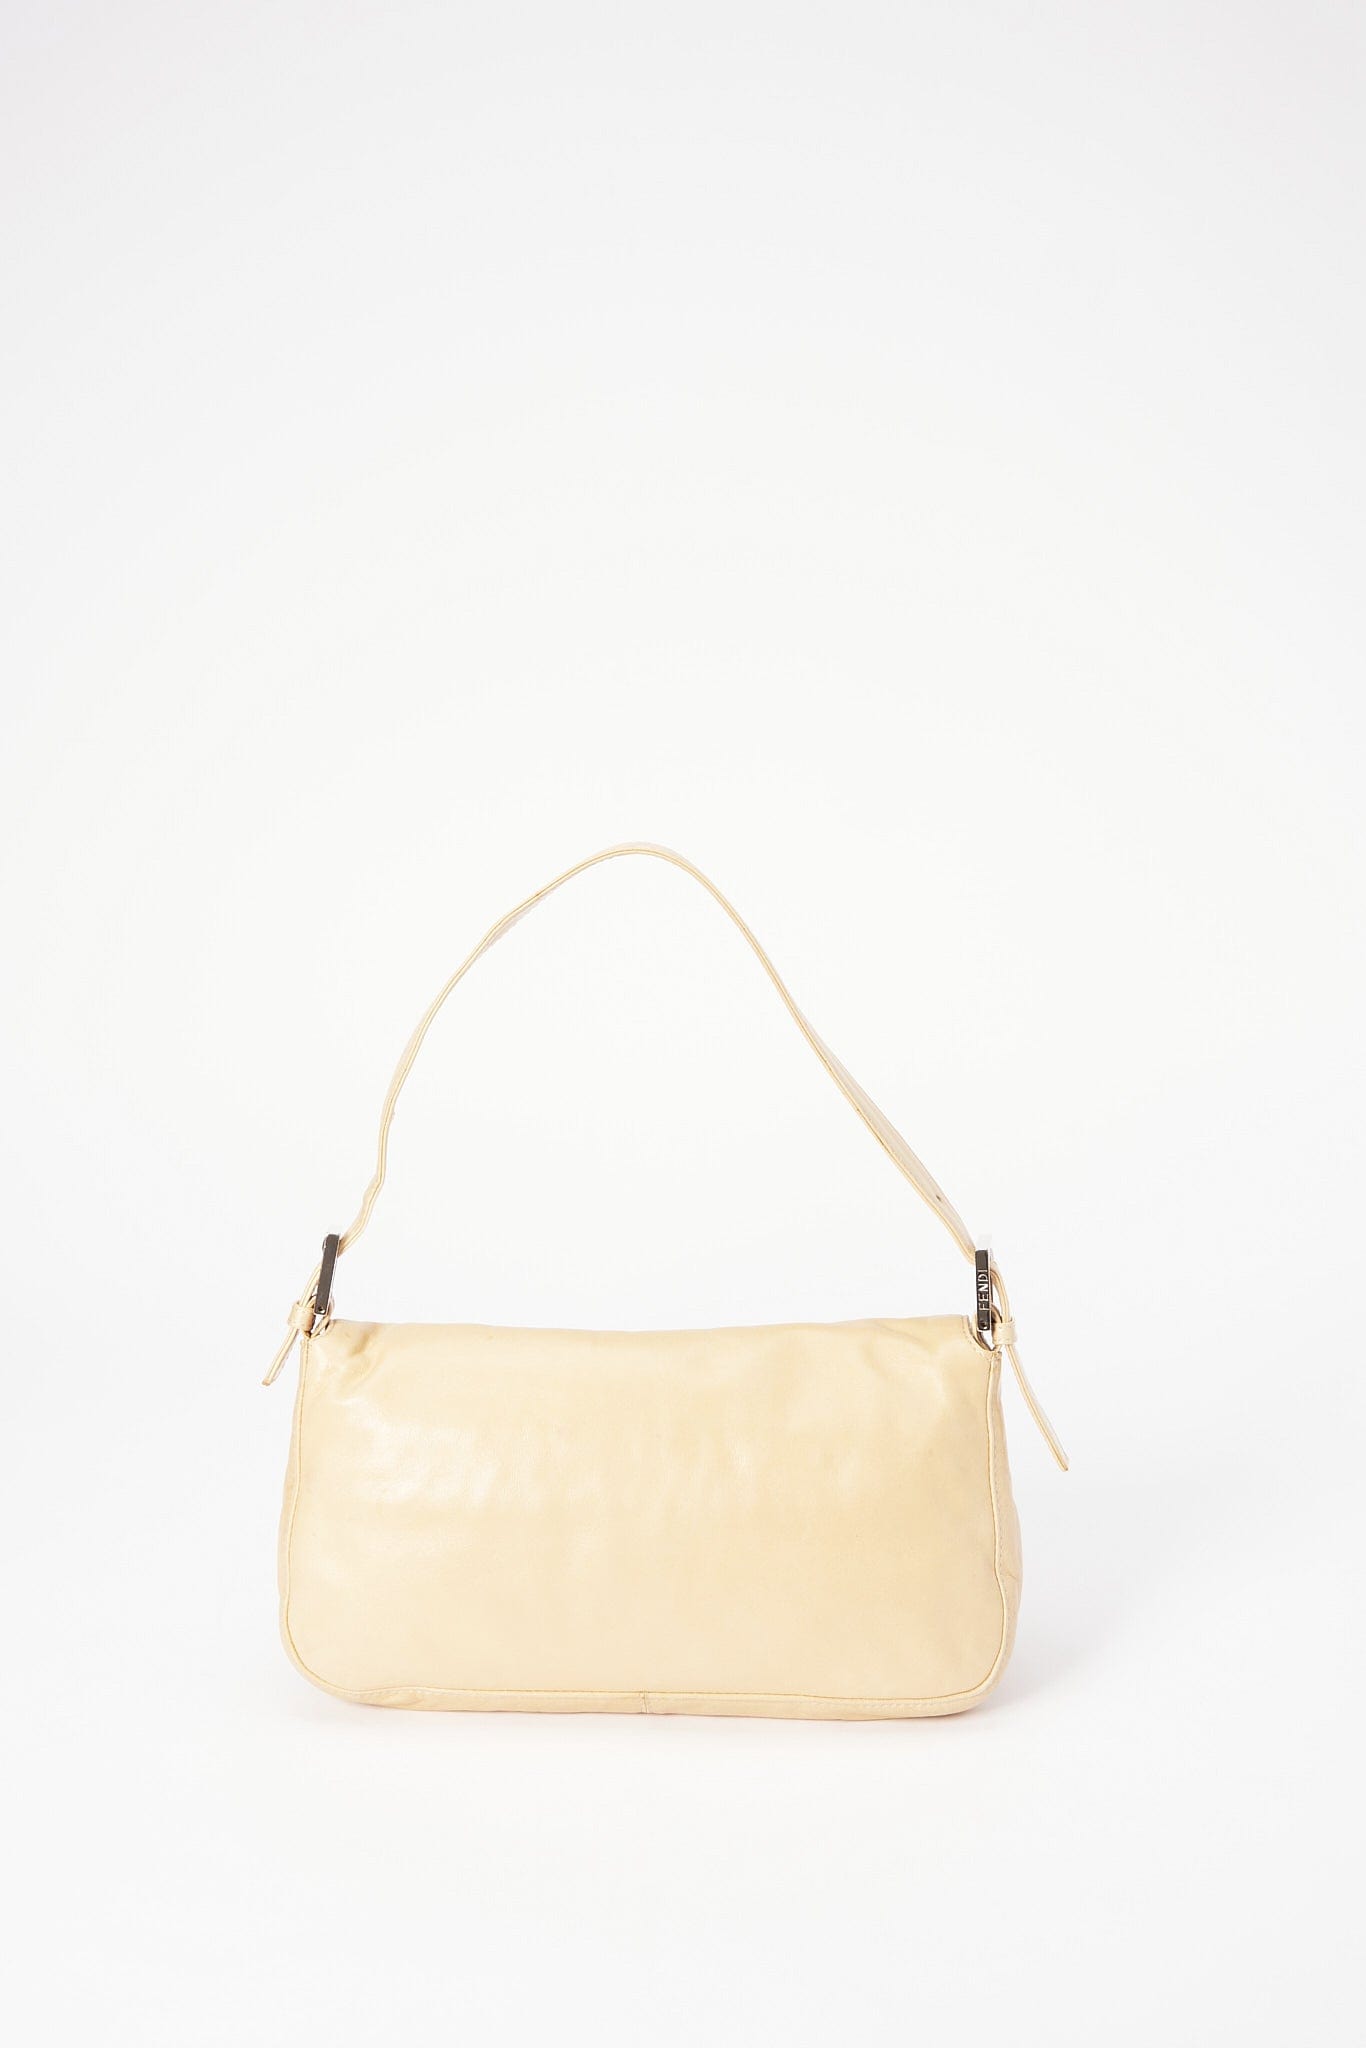 Fendi Cream Leather Baguette Bag